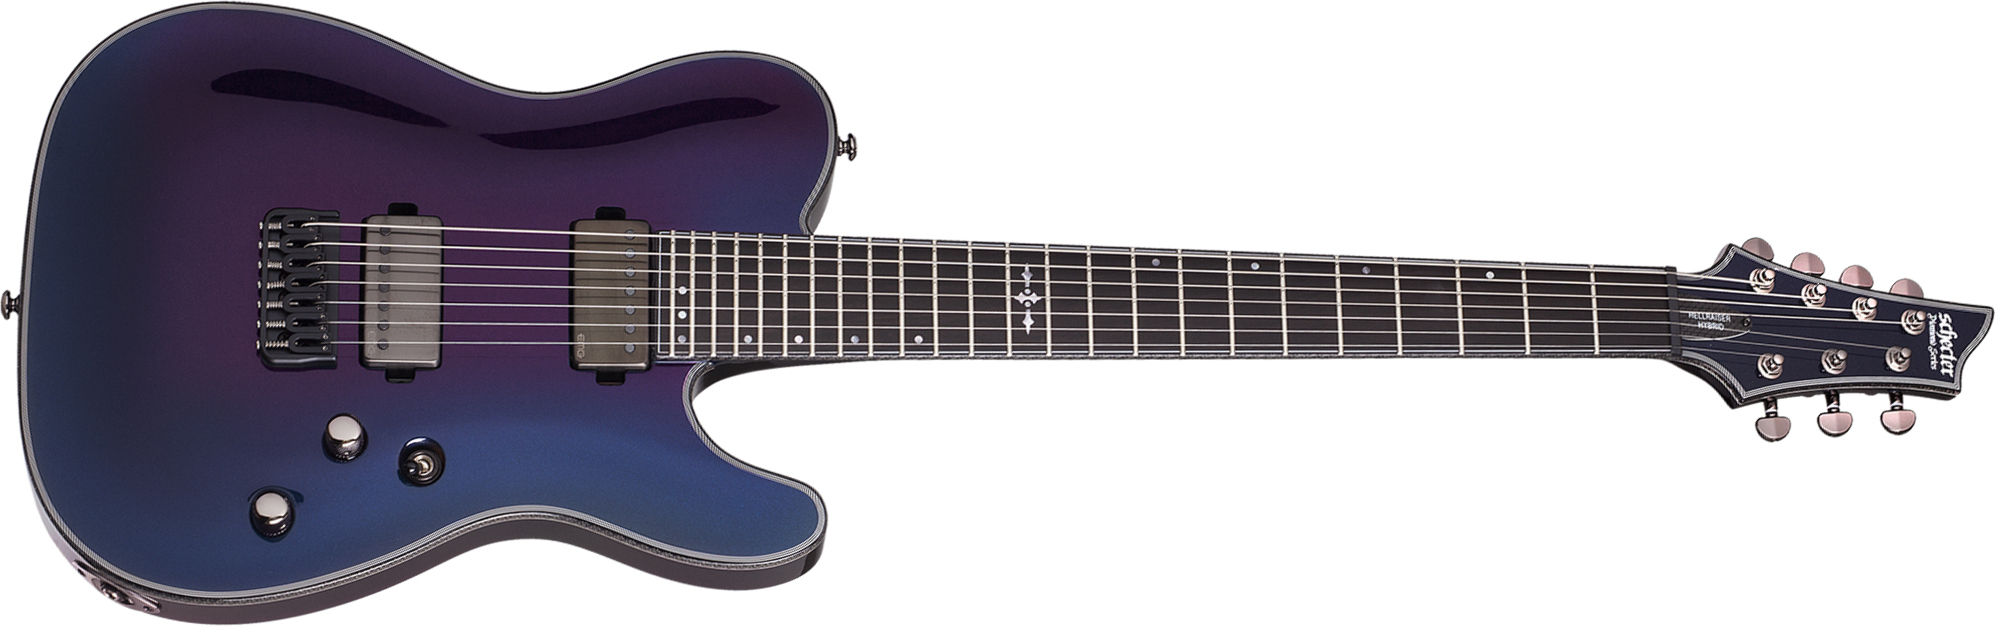 Schecter Pt-7 Hellraiser Hybrid 7c 2h Emg Ht Eb - Ultraviolet - 7 string electric guitar - Main picture